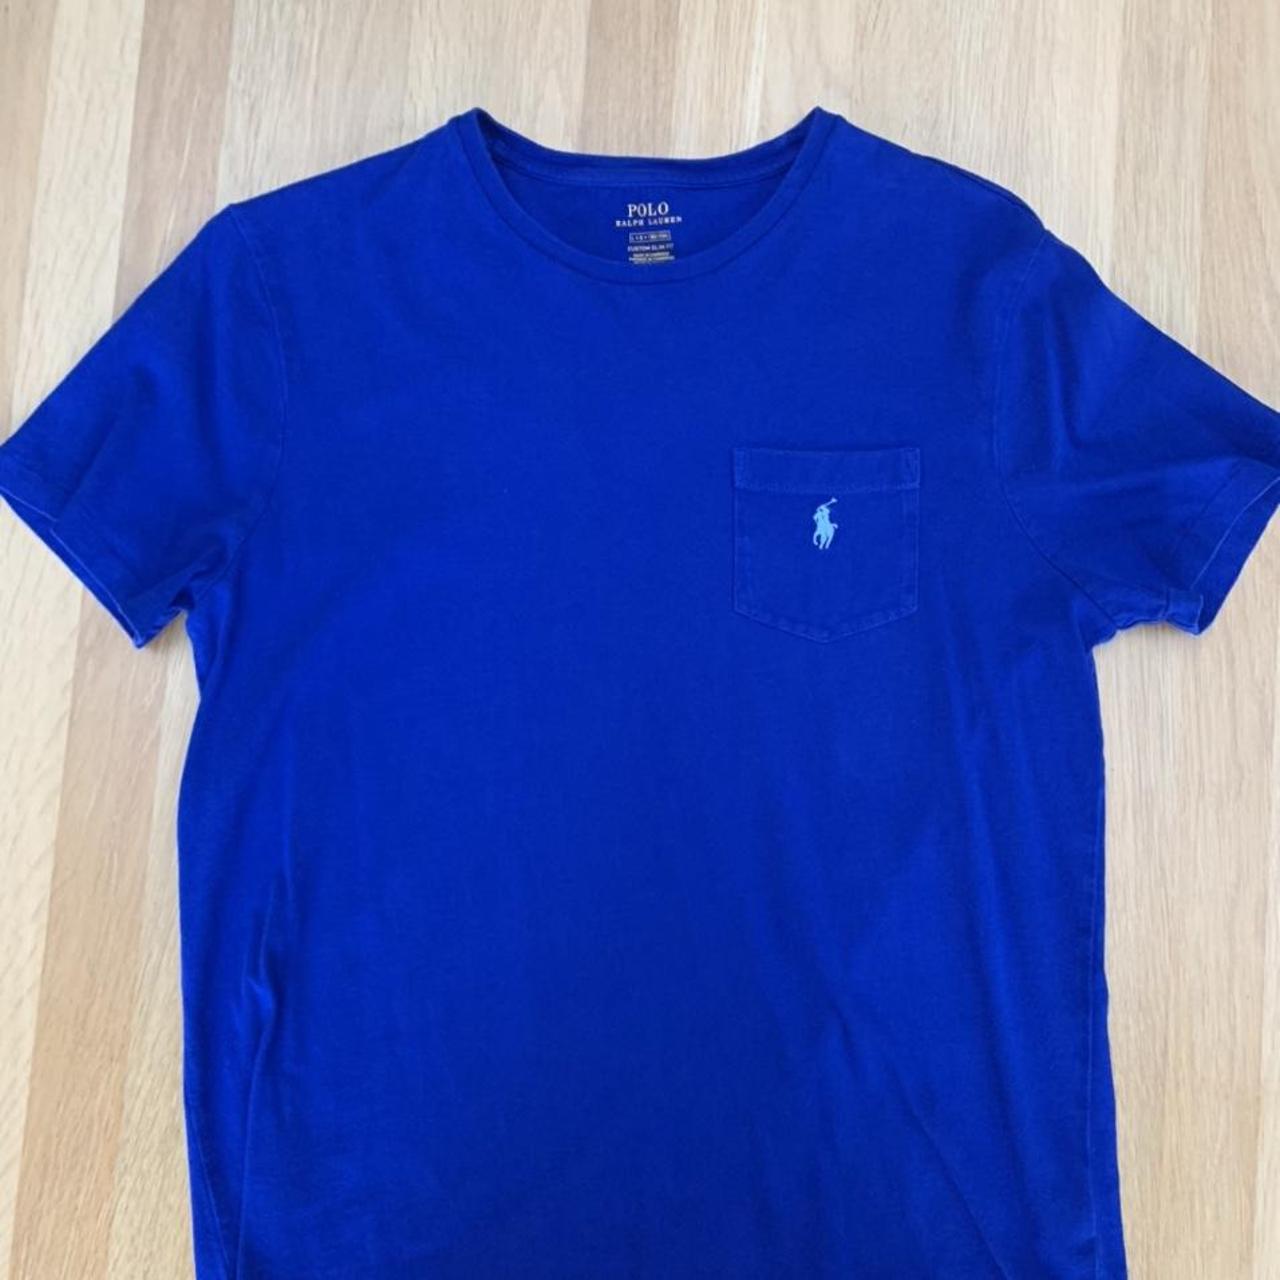 Polo Ralph Lauren tshirt #blue #tshirt #designer... - Depop